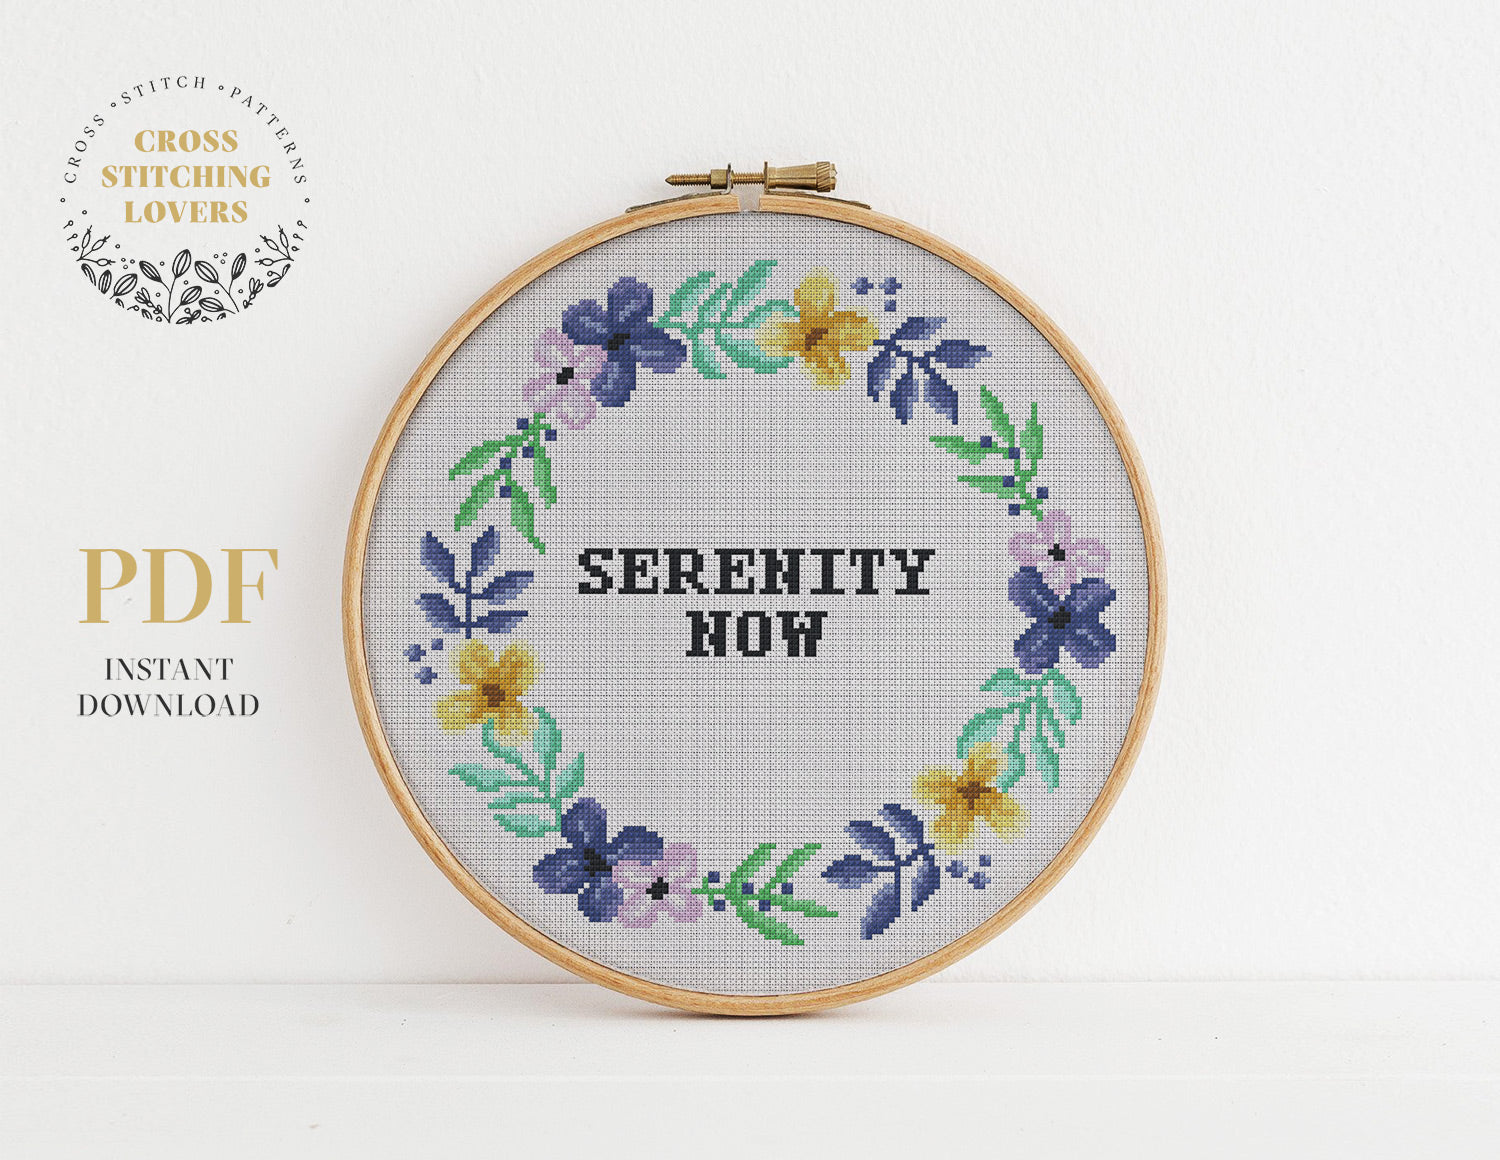 Serenity now -  Funny Cross stitch pattern